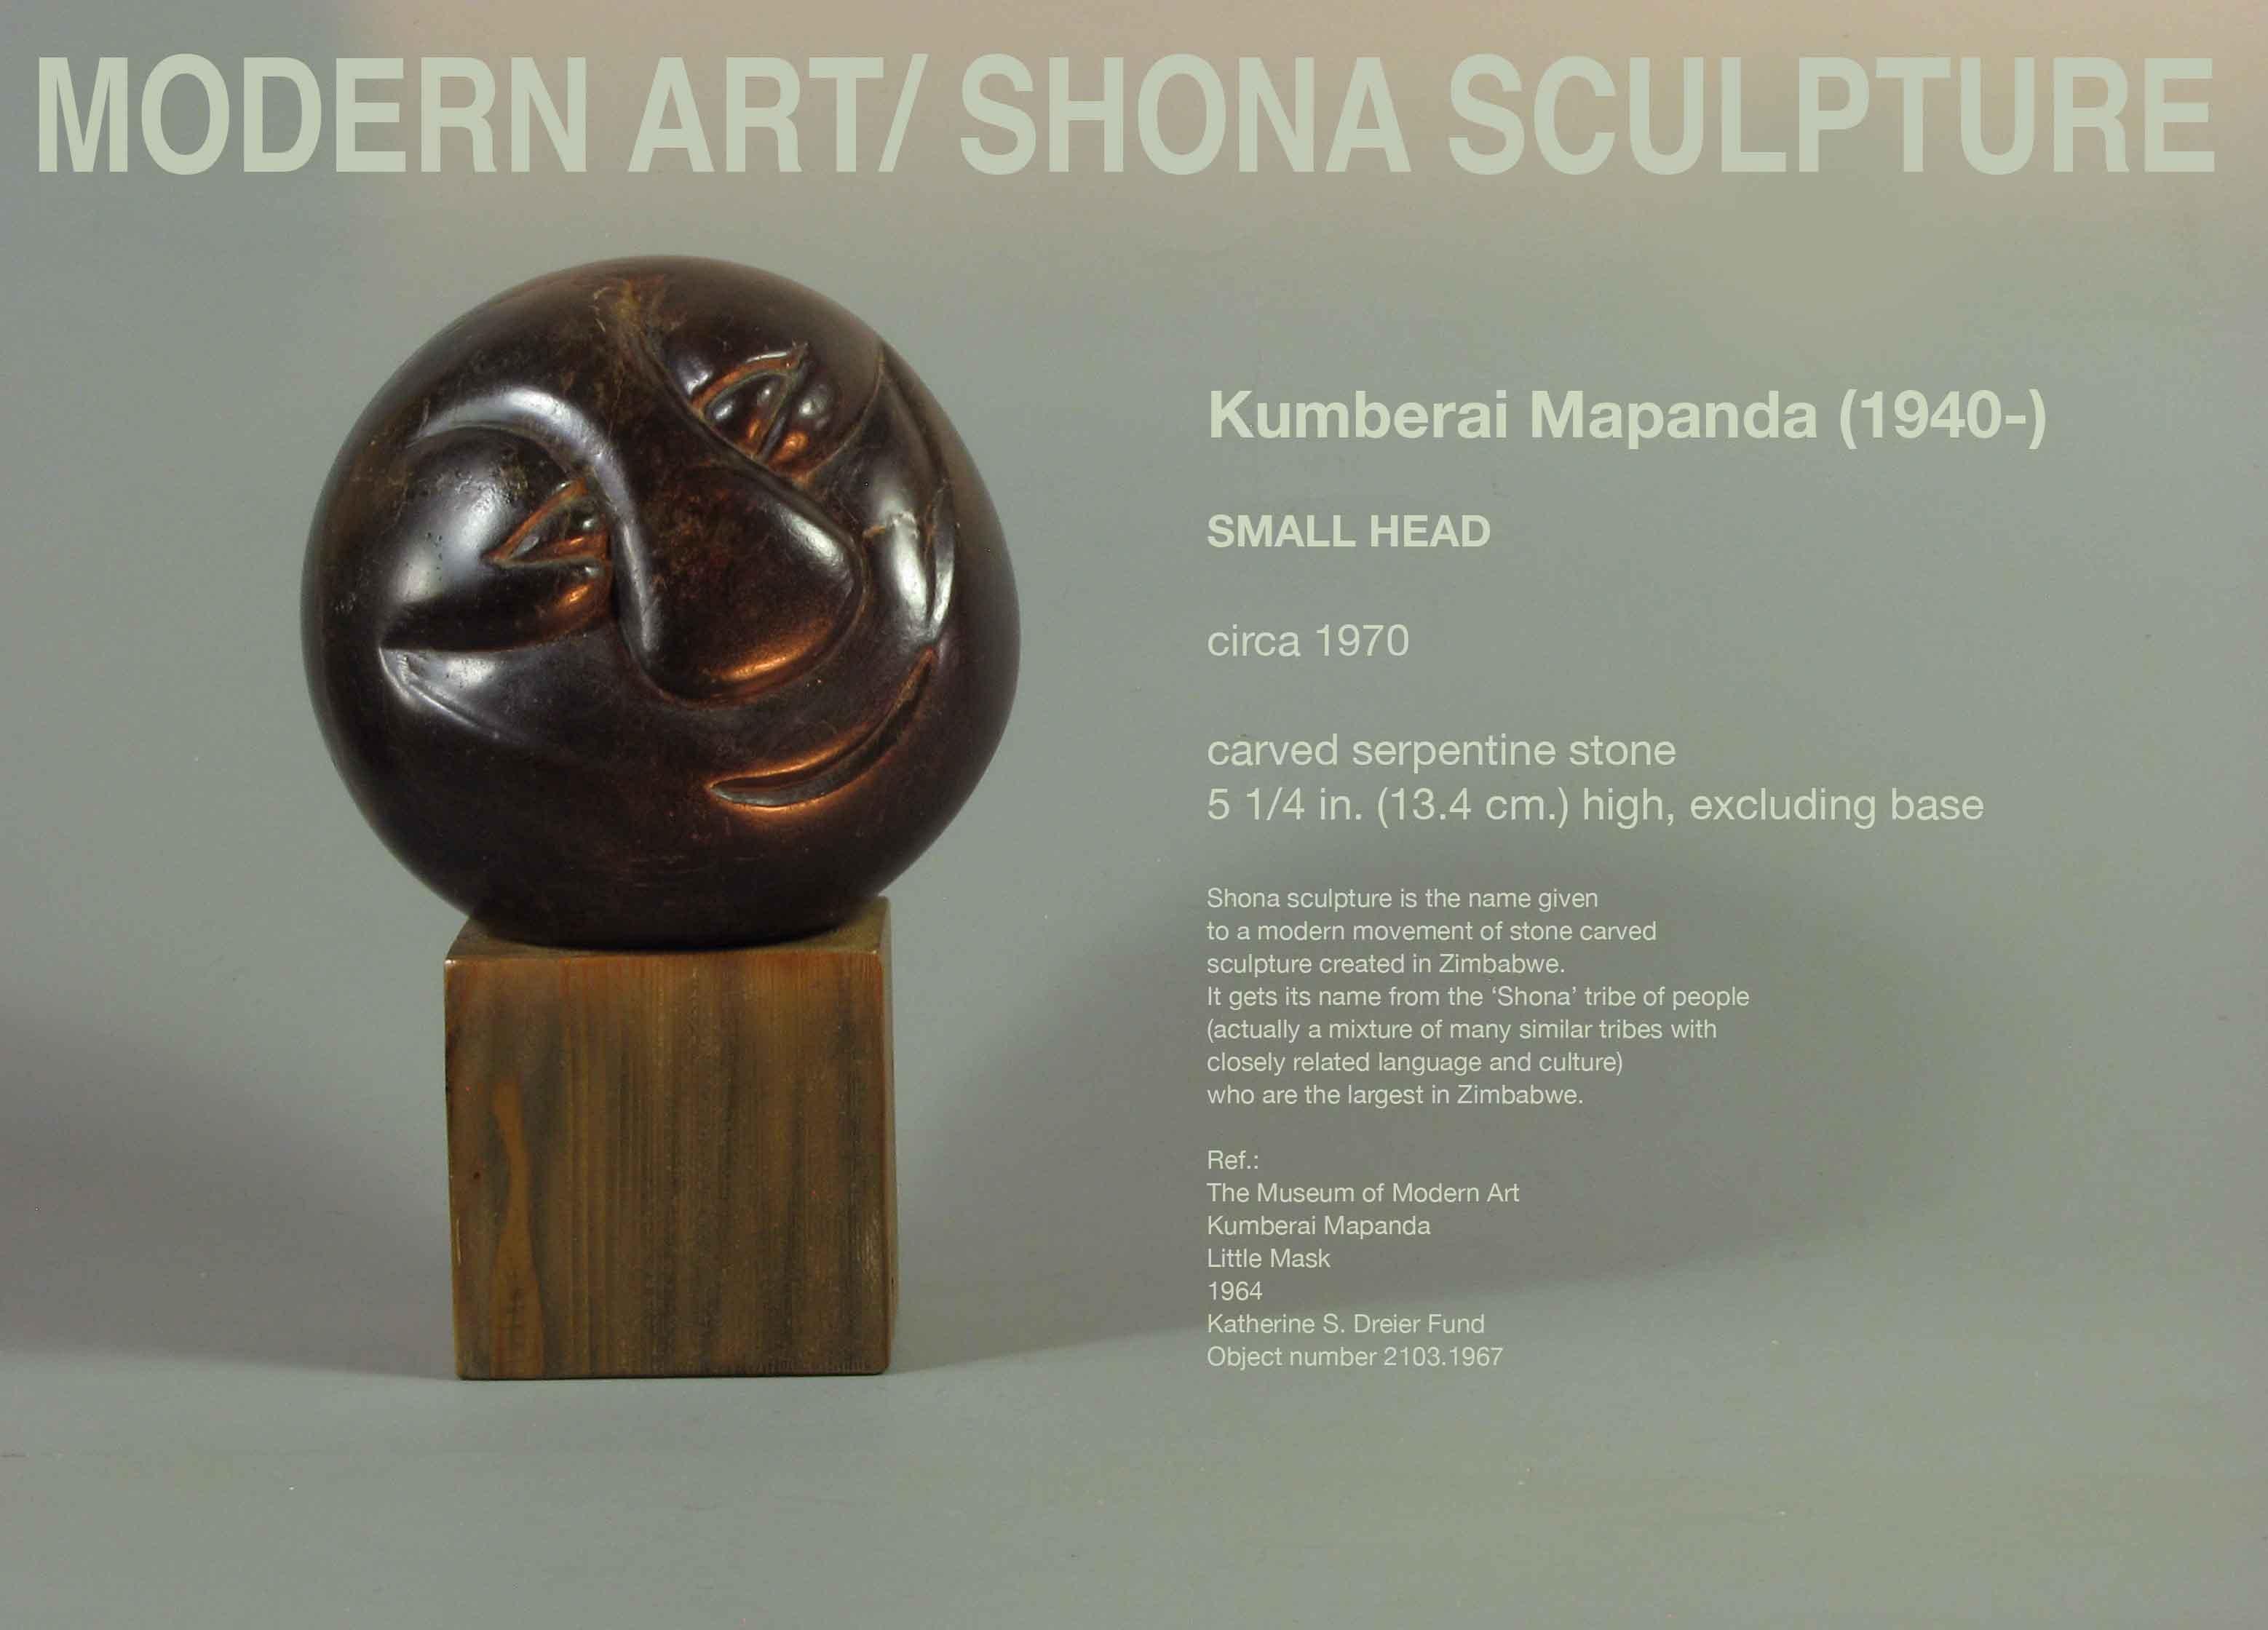 Kumberai Mapanda (1940-)

Small head.

circa 1970.

Carved serpentine stone
5 1/4